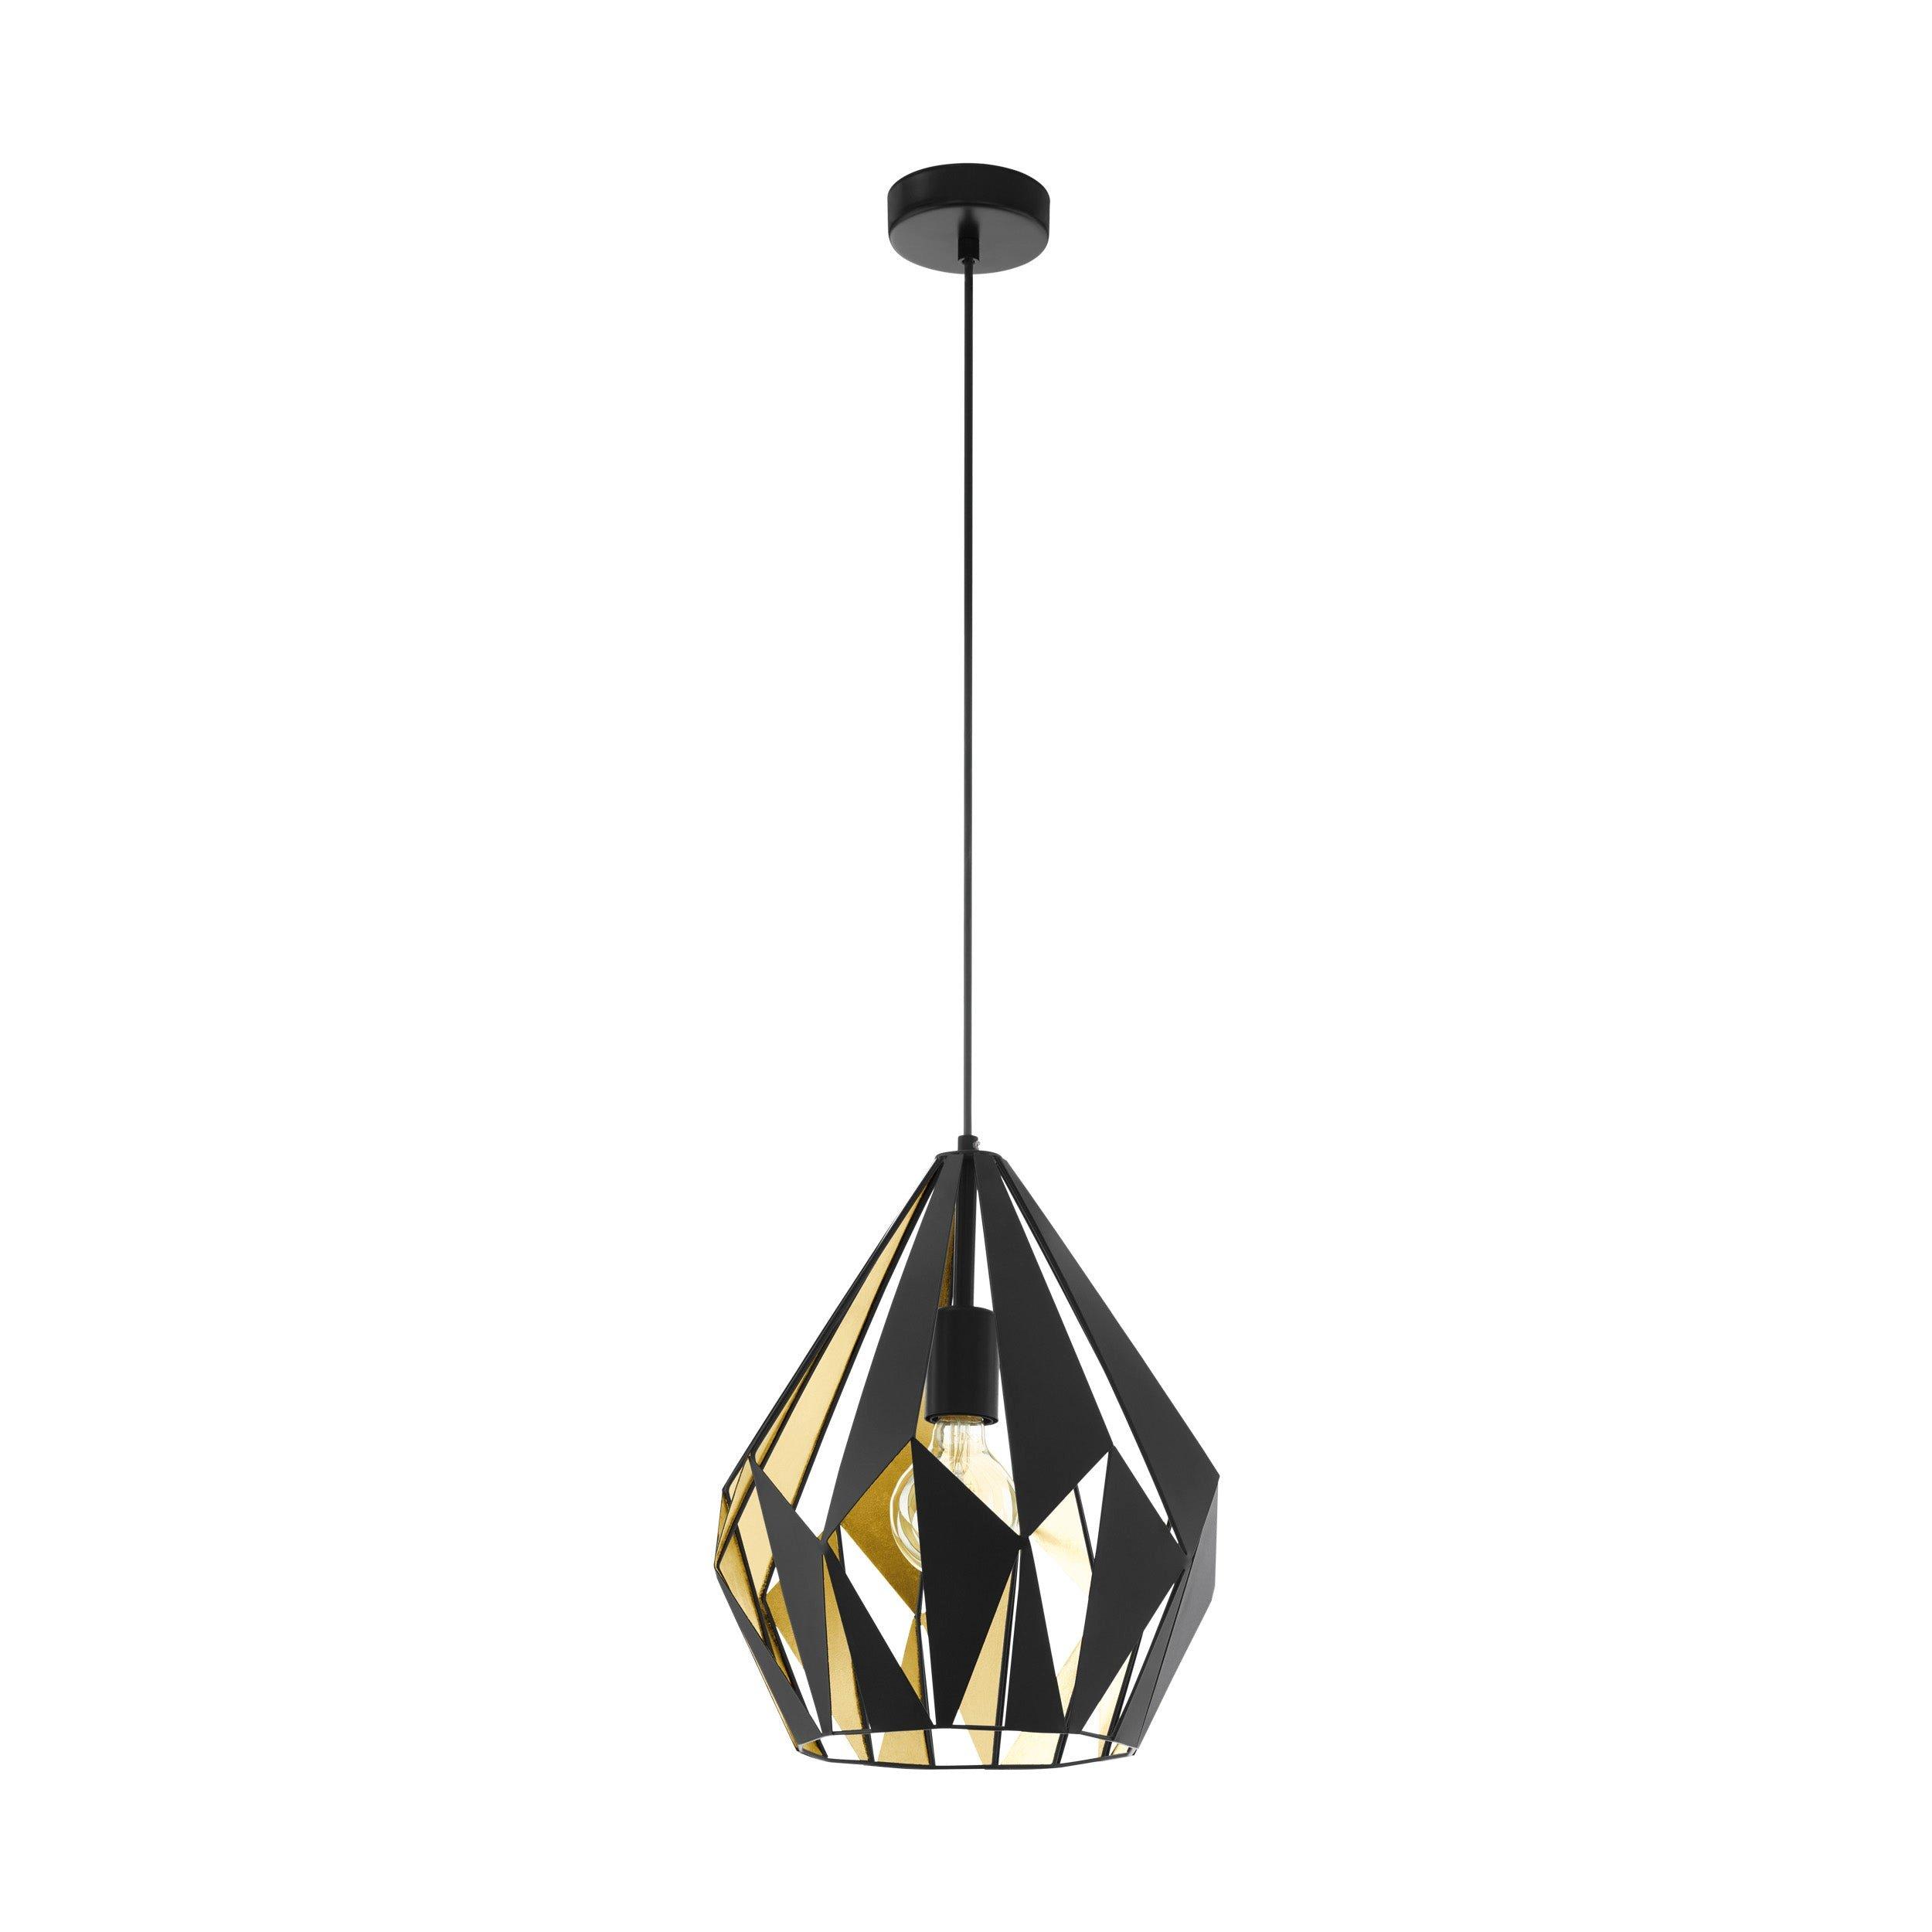 Hanging Ceiling Pendant Light Black & Gold Geometric 1x 60W E27 Feature Lamp